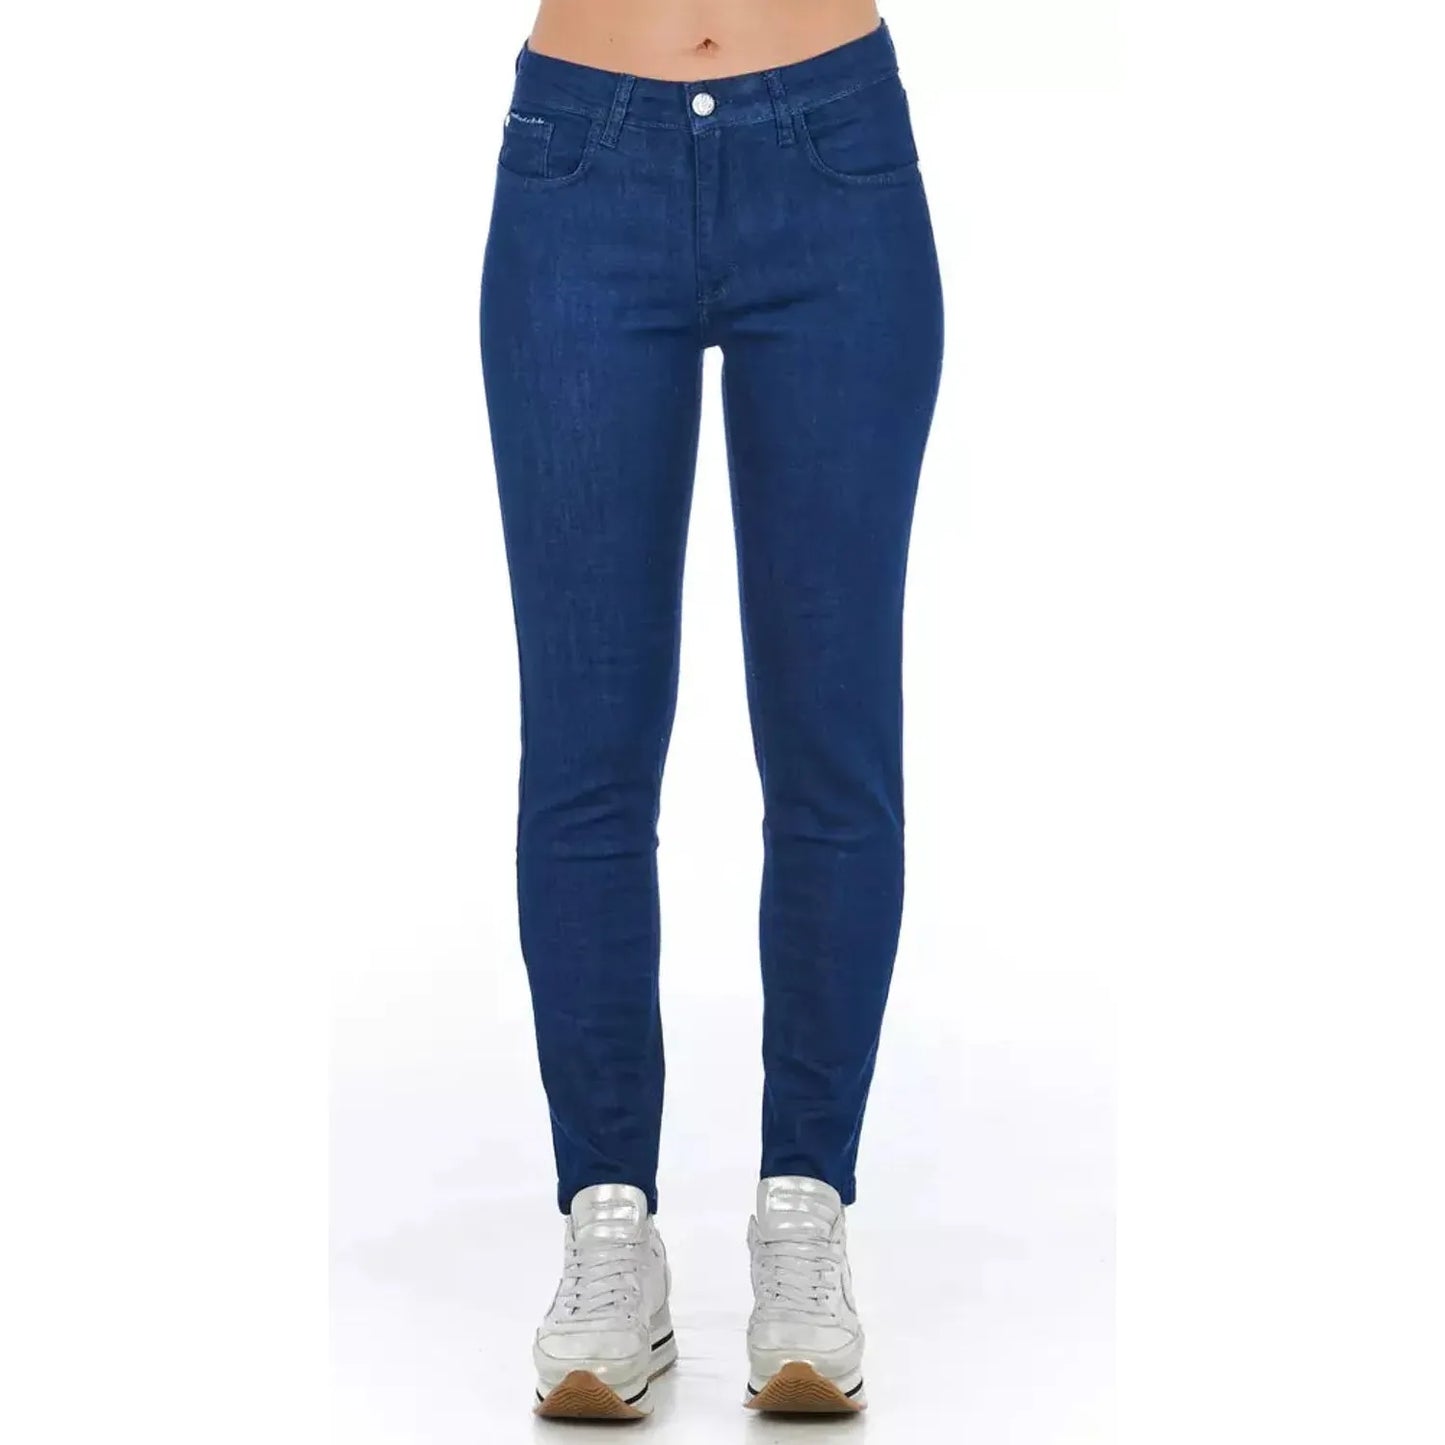 Frankie Morello Chic Multi-Pocket Skinny Denim blue-cotton-jeans-pant-50 product-21769-2098657276-23-21f4c503-52c.webp